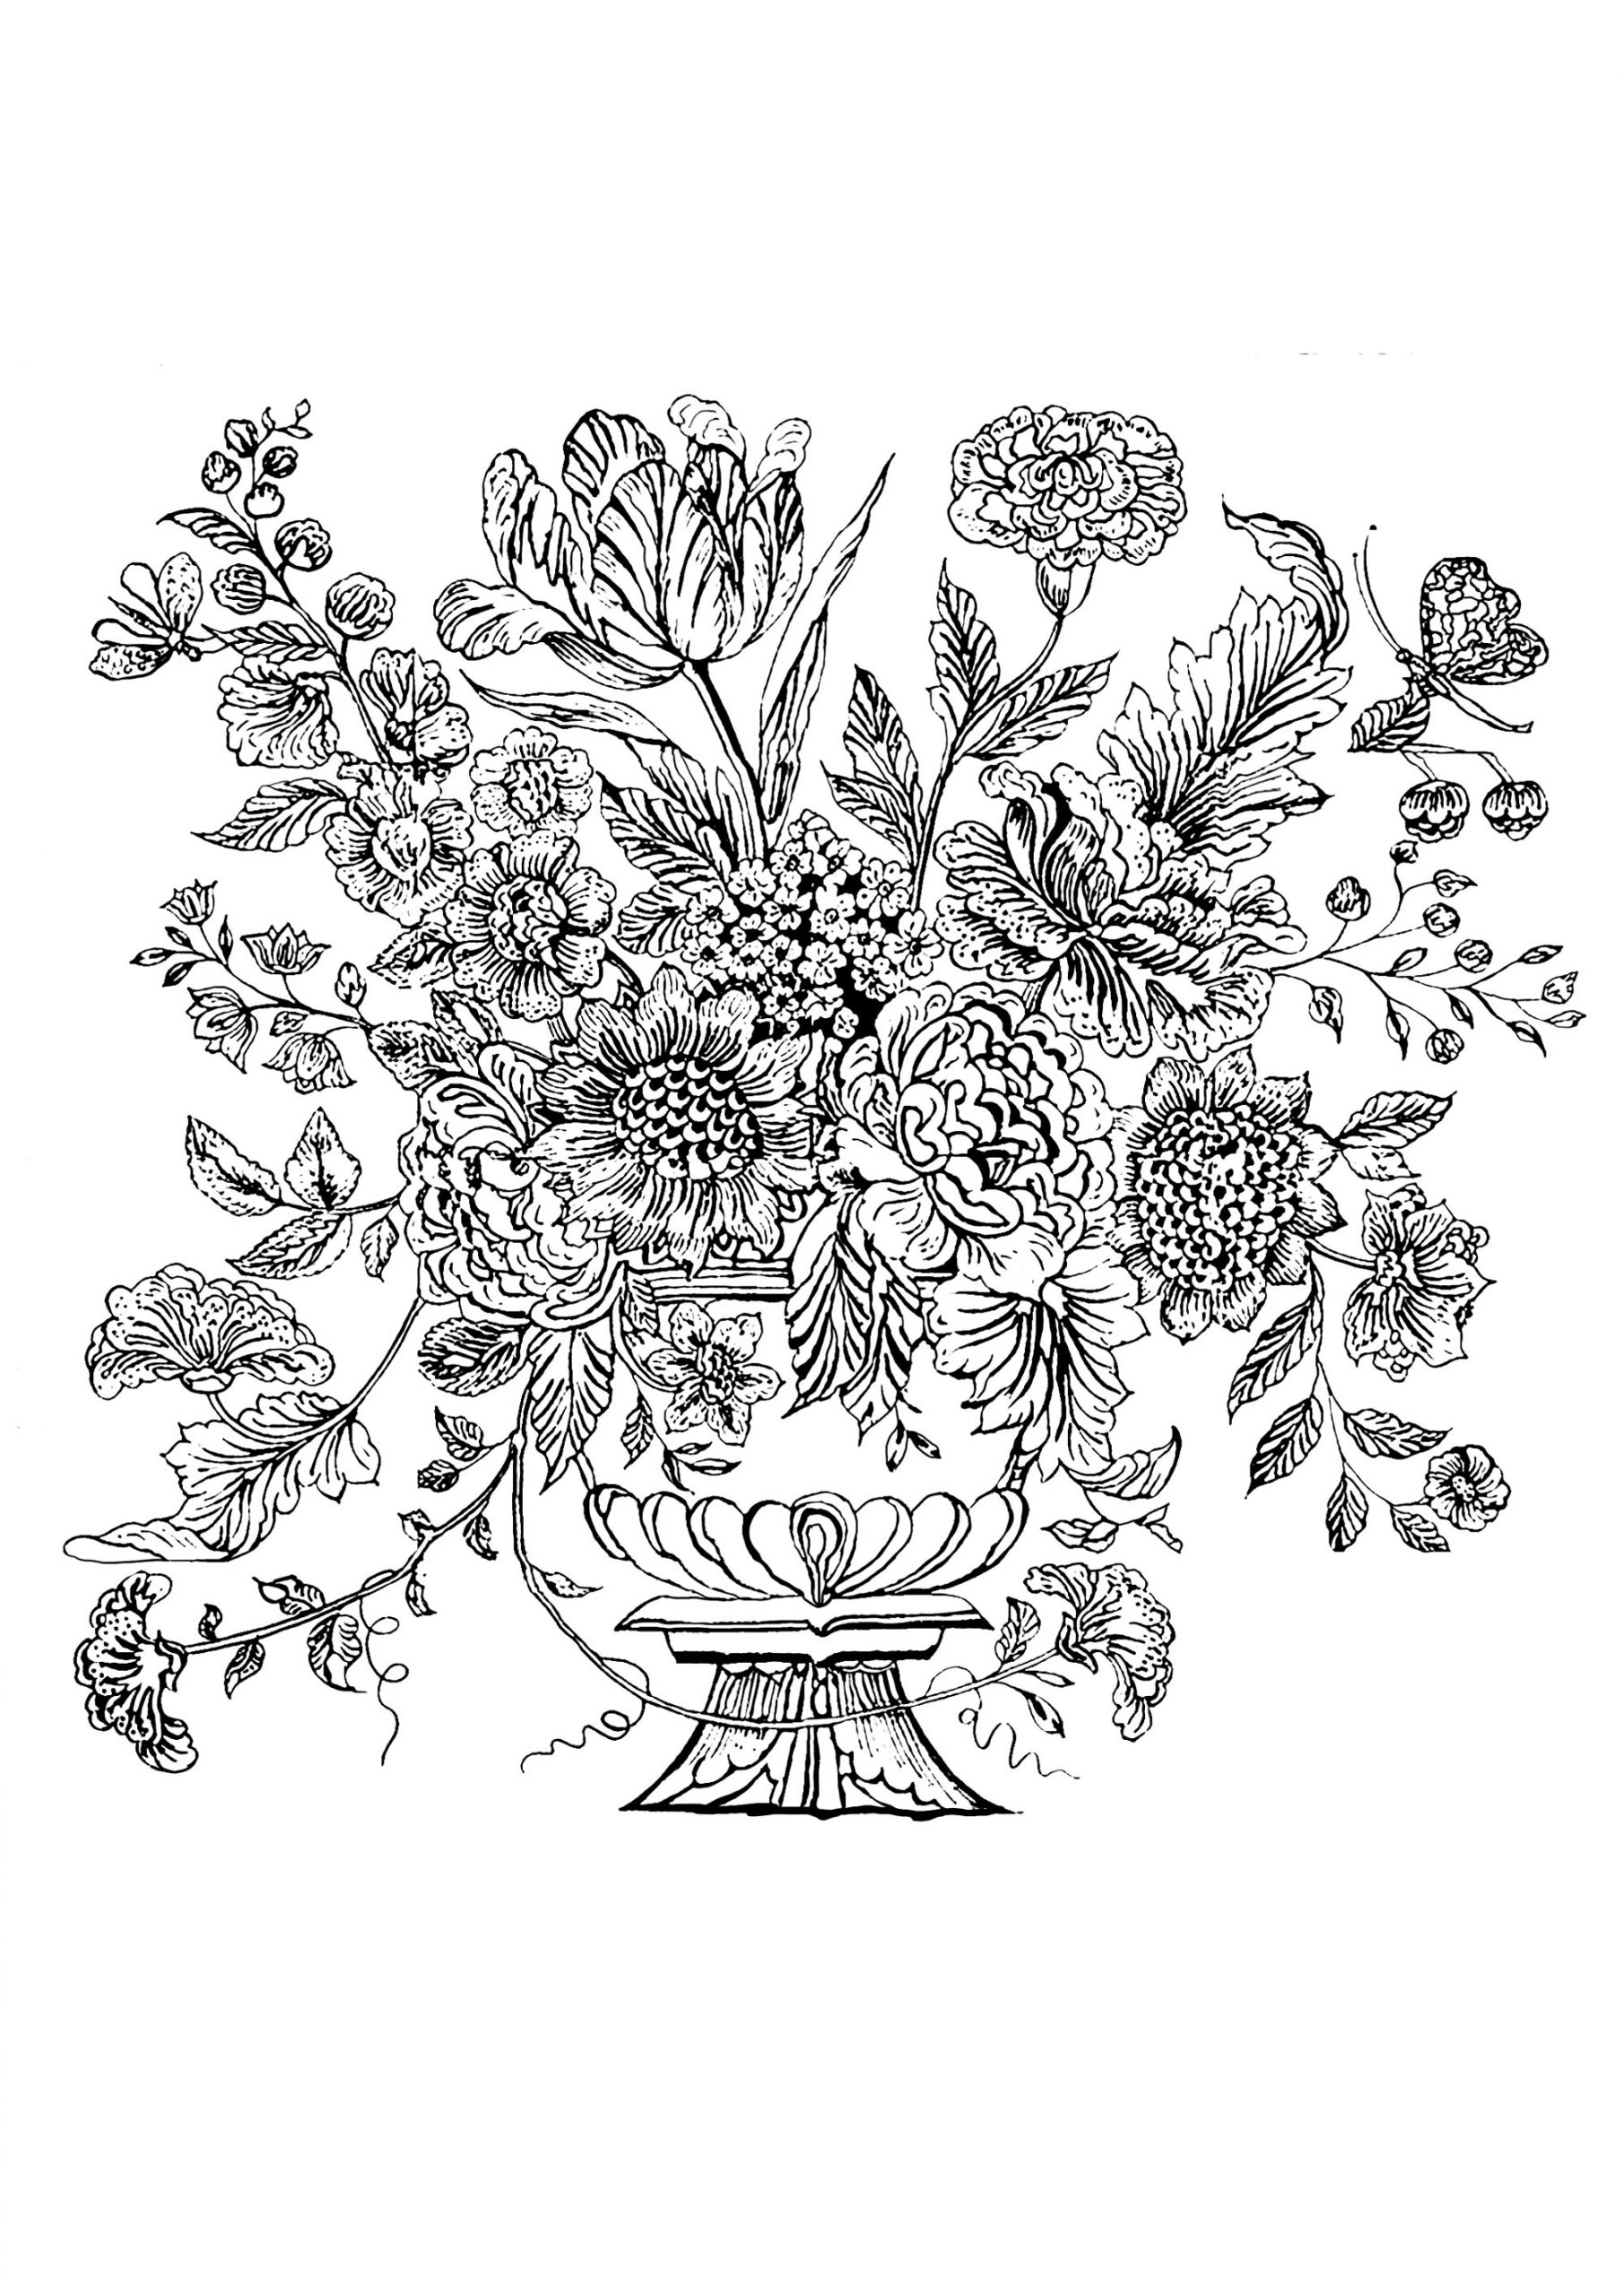 Flower Vase 1740 Mural Tile - Flowers Adult Coloring Pages à Coloriage Vase